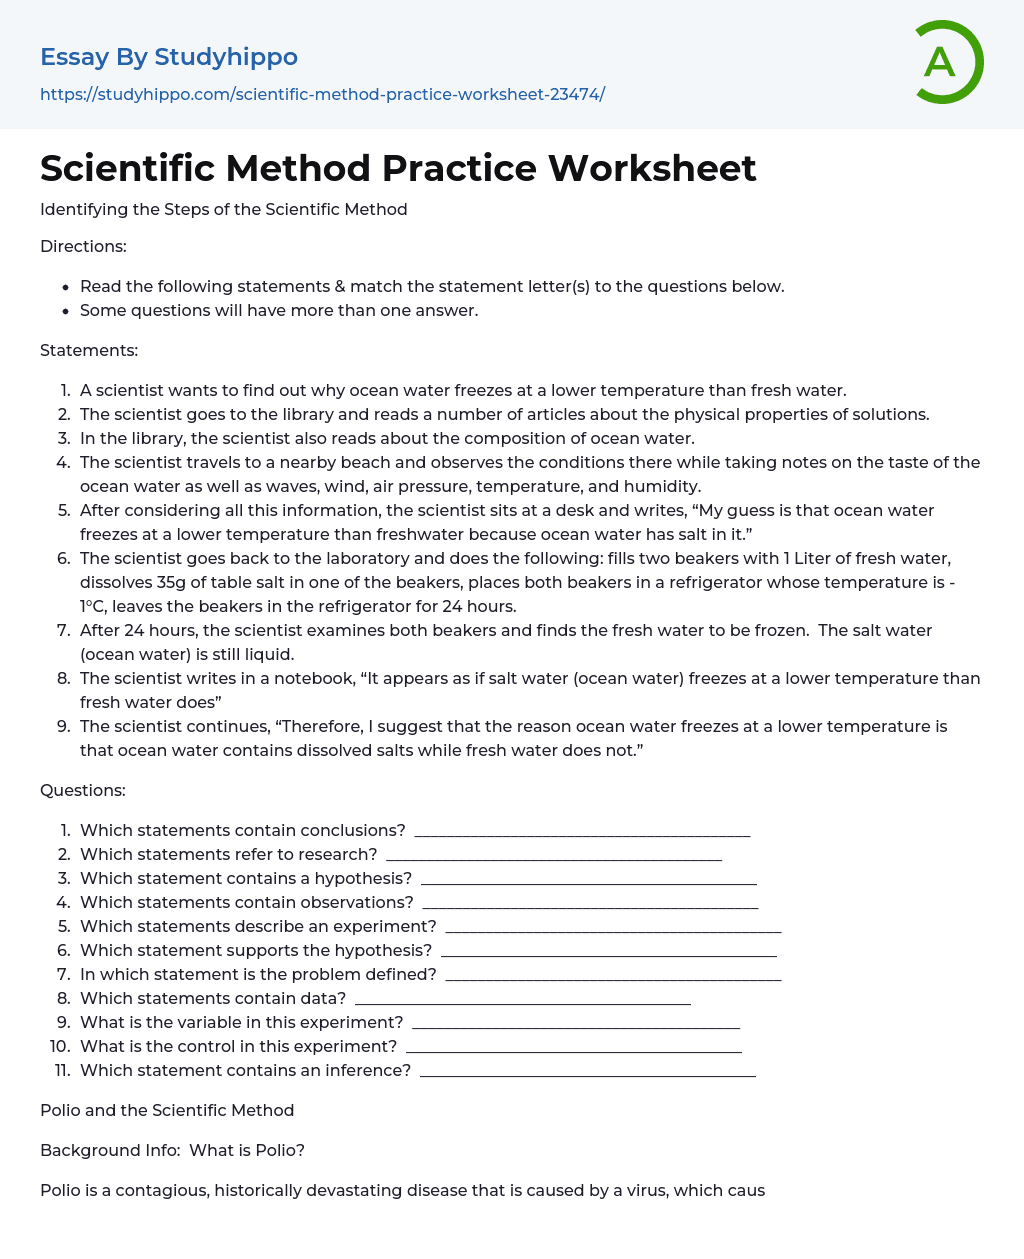 Scientific Method Practice Worksheet Essay Example | StudyHippo.com